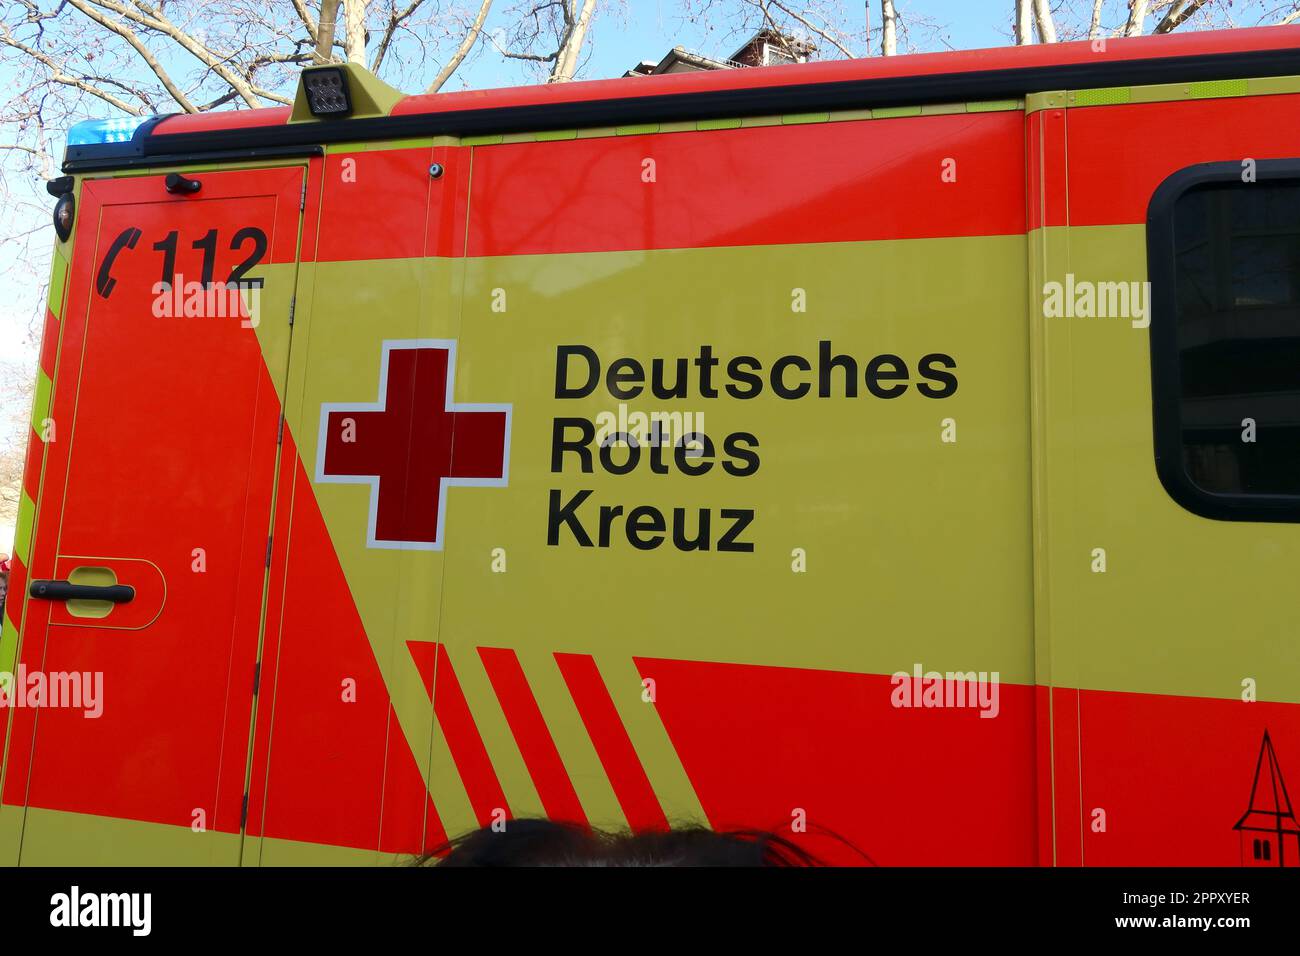 German Red Cross society response vehicle, Deutshes Rotes Kreuz Bereitschaften, Mainz city centre, Rhineland-Palatinate, Germany Stock Photo